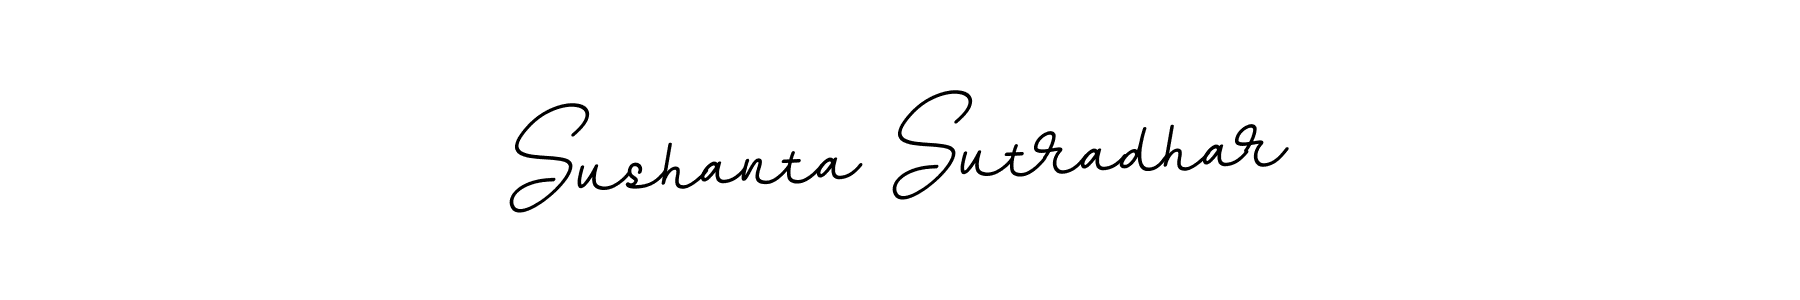 How to Draw Sushanta Sutradhar signature style? BallpointsItalic-DORy9 is a latest design signature styles for name Sushanta Sutradhar. Sushanta Sutradhar signature style 11 images and pictures png